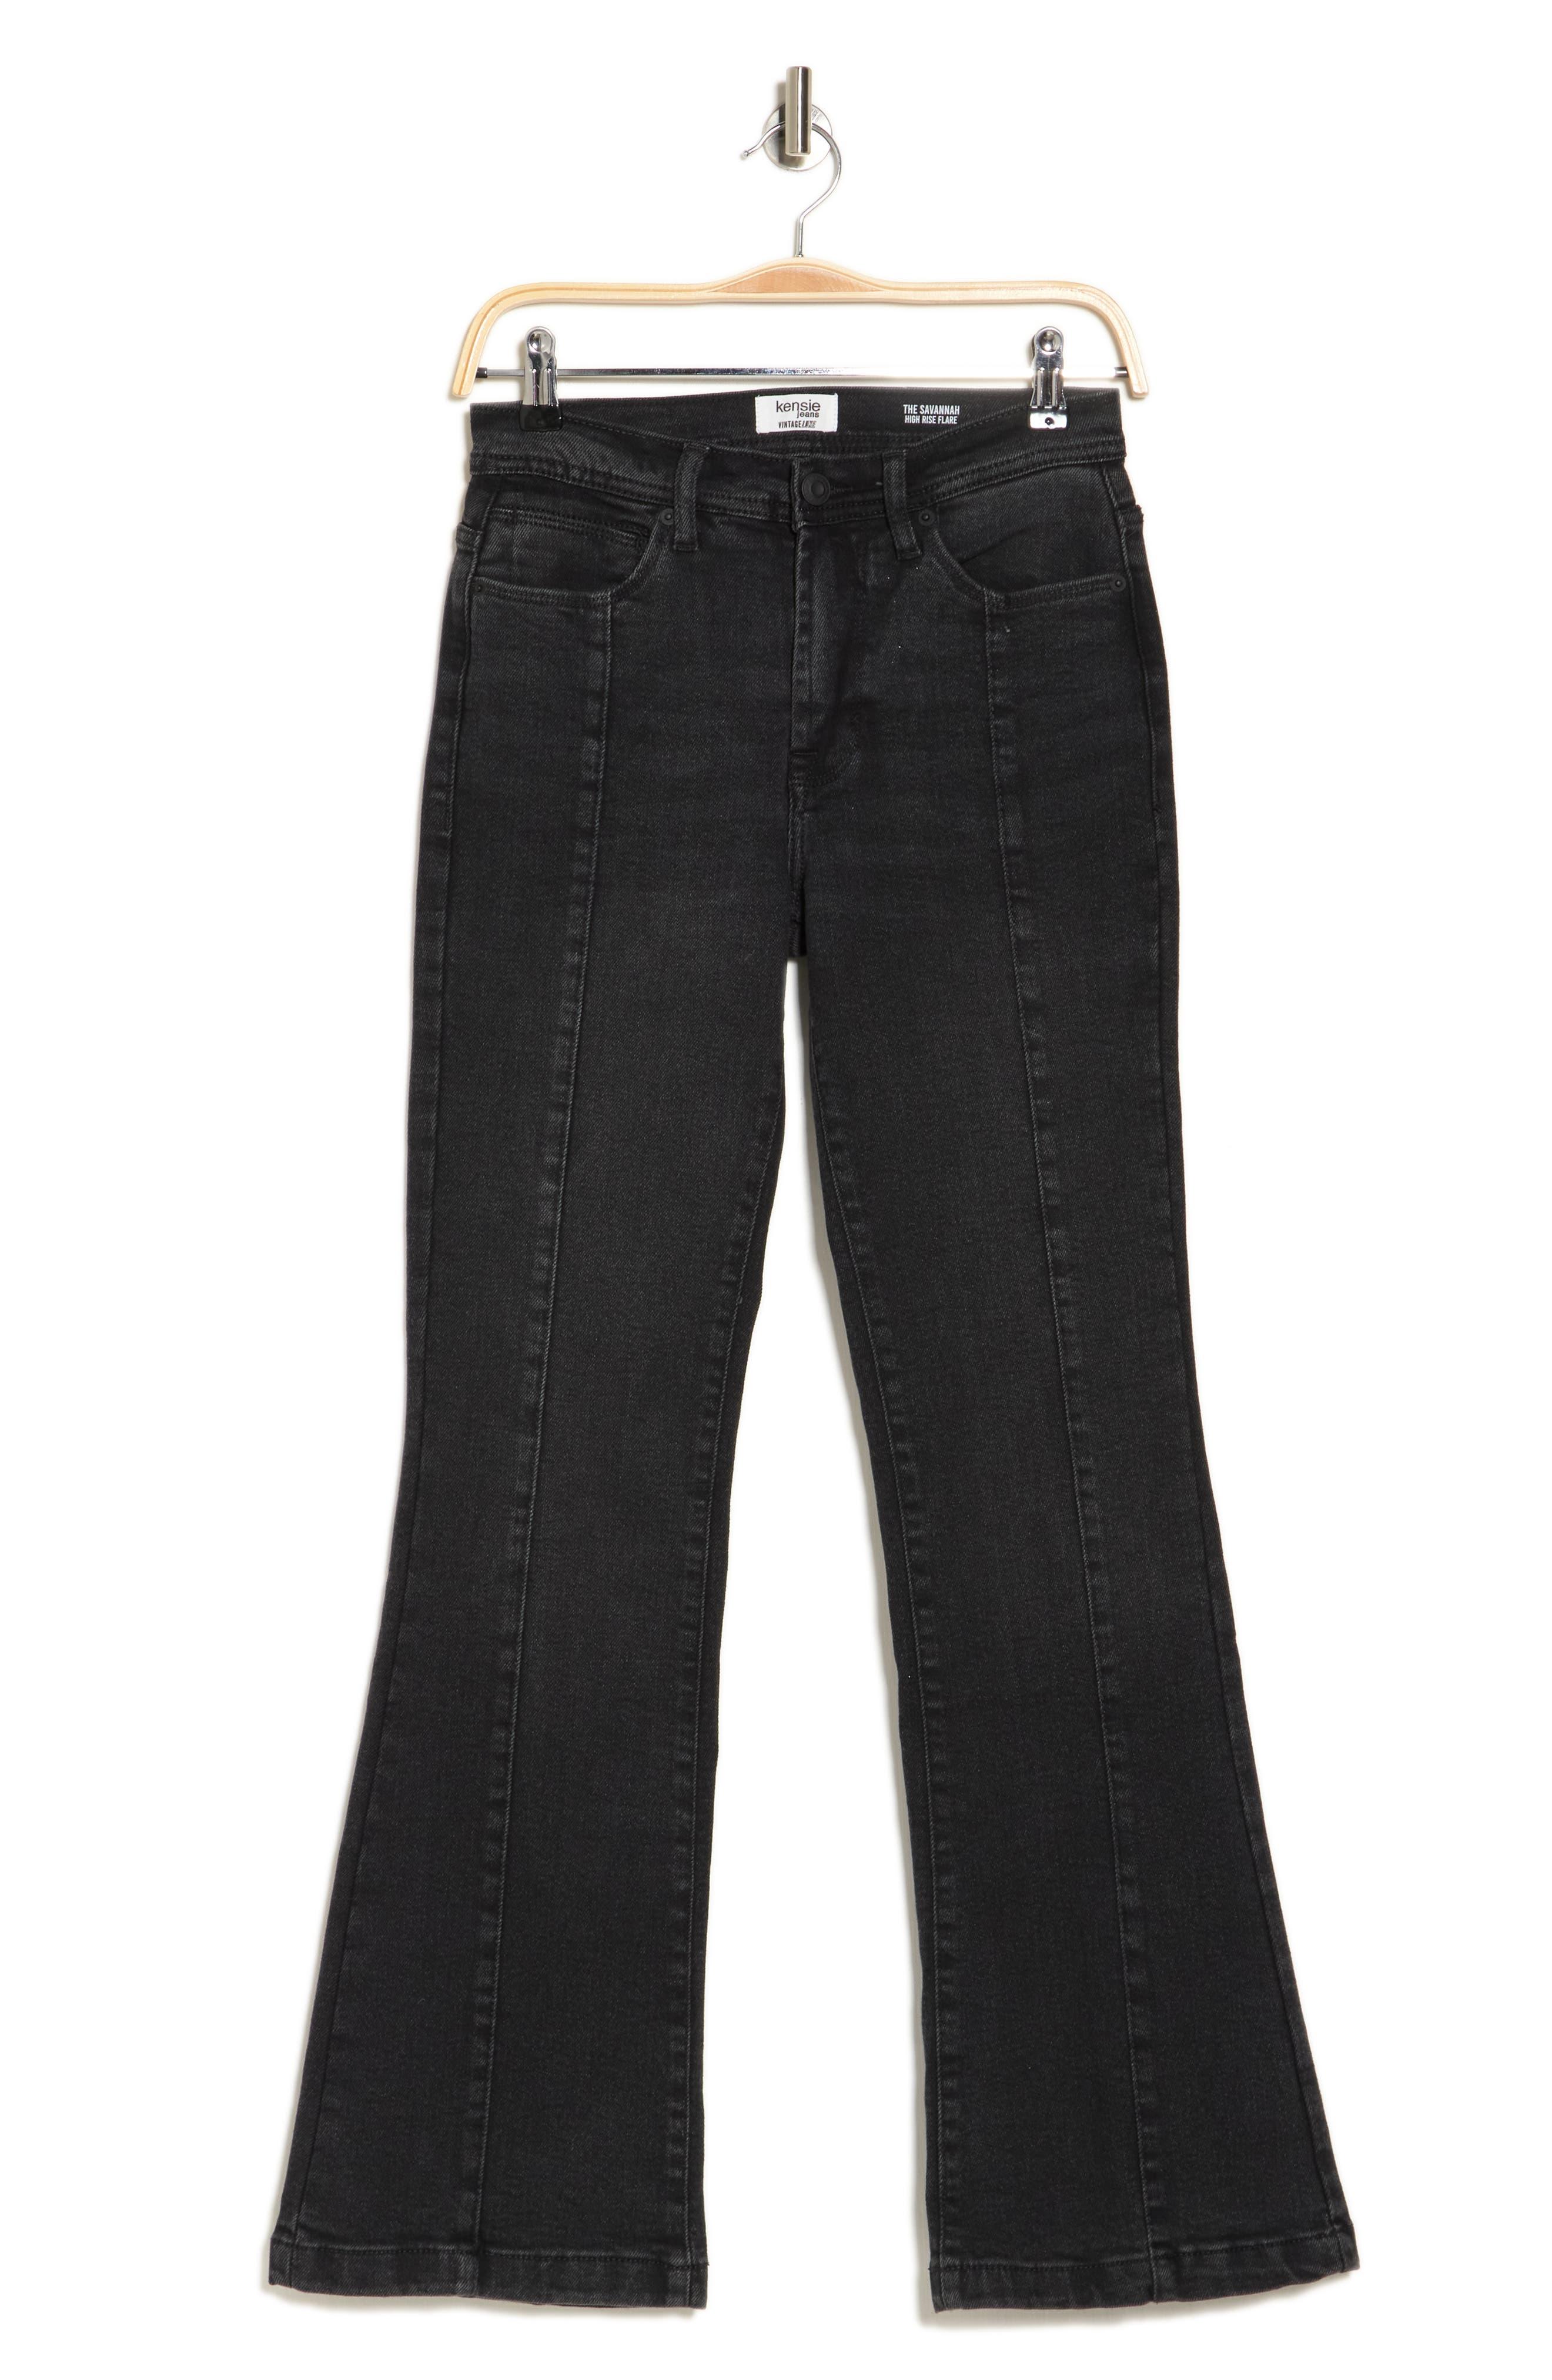 Kensie High Waist Pintuck Stretch Flare Jeans in Black | Lyst